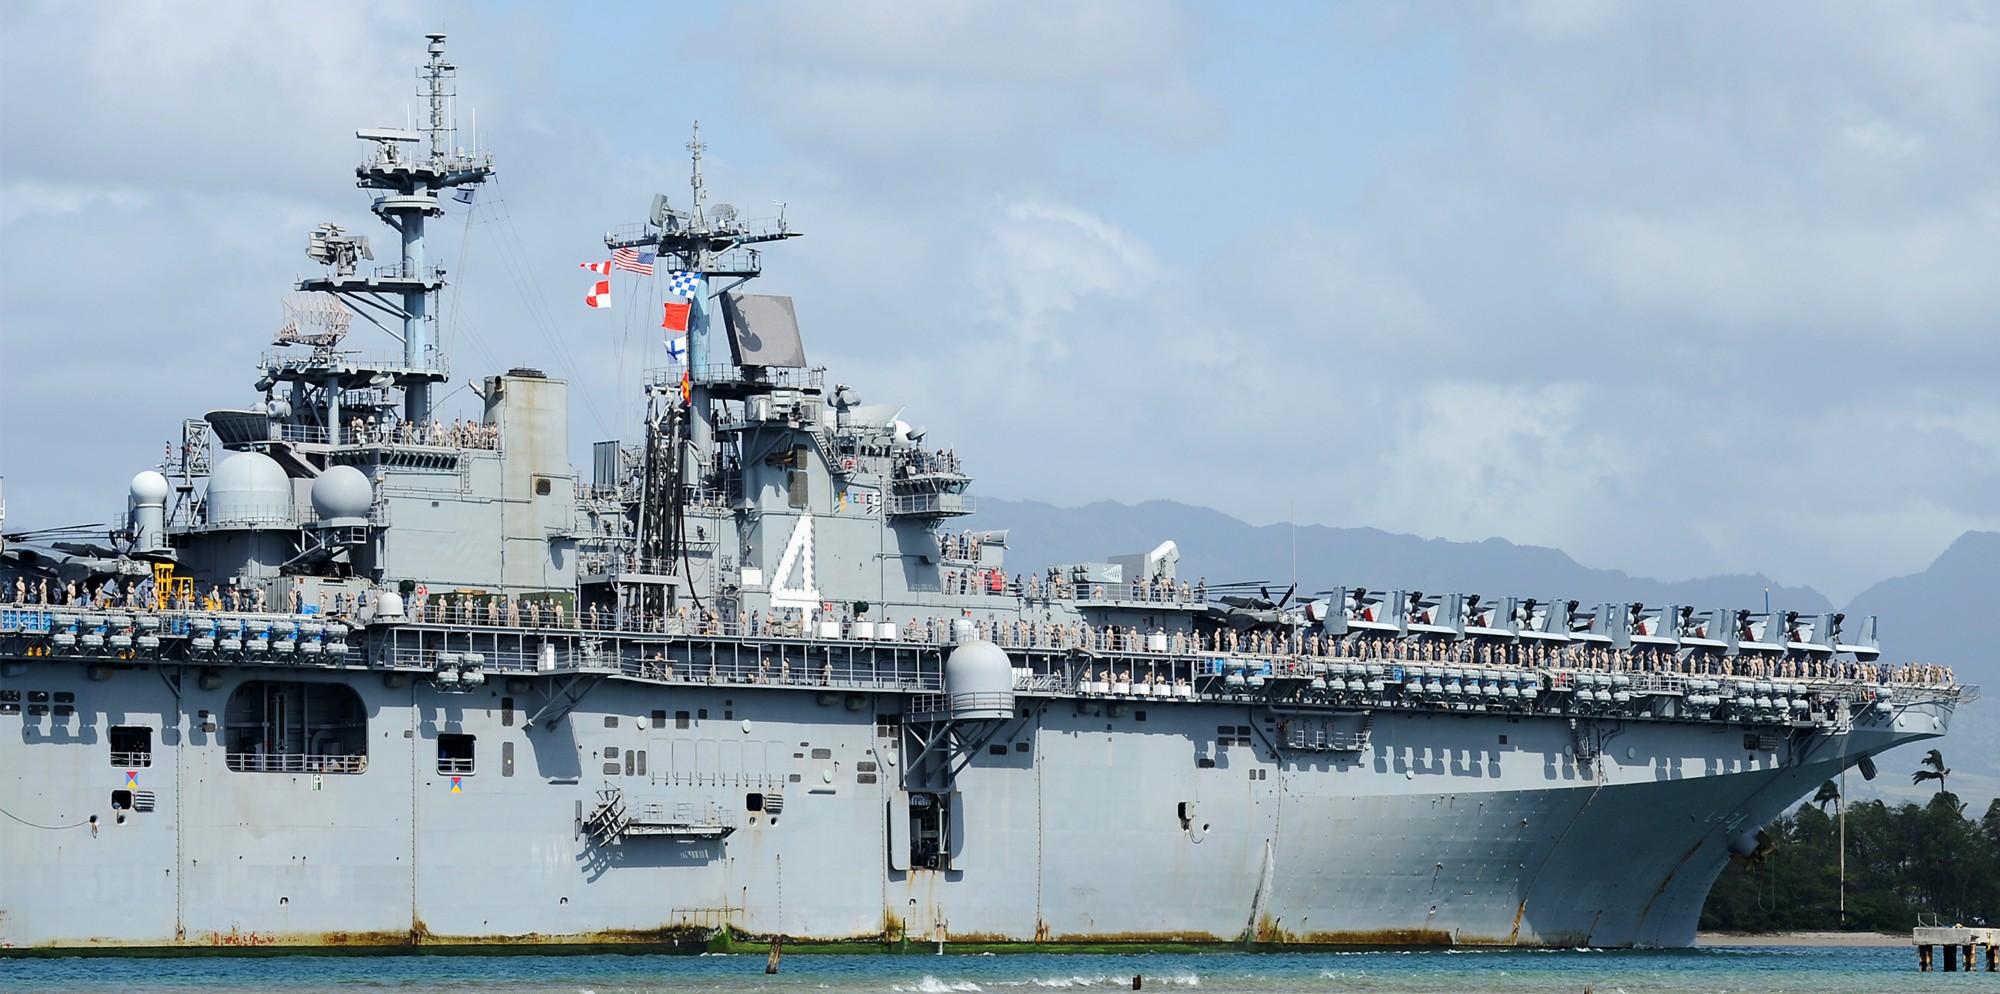 lhd-4 uss boxer wasp class amphibious assault ship dock landing us navy marines vmm-166 pearl harbor hawaii 92